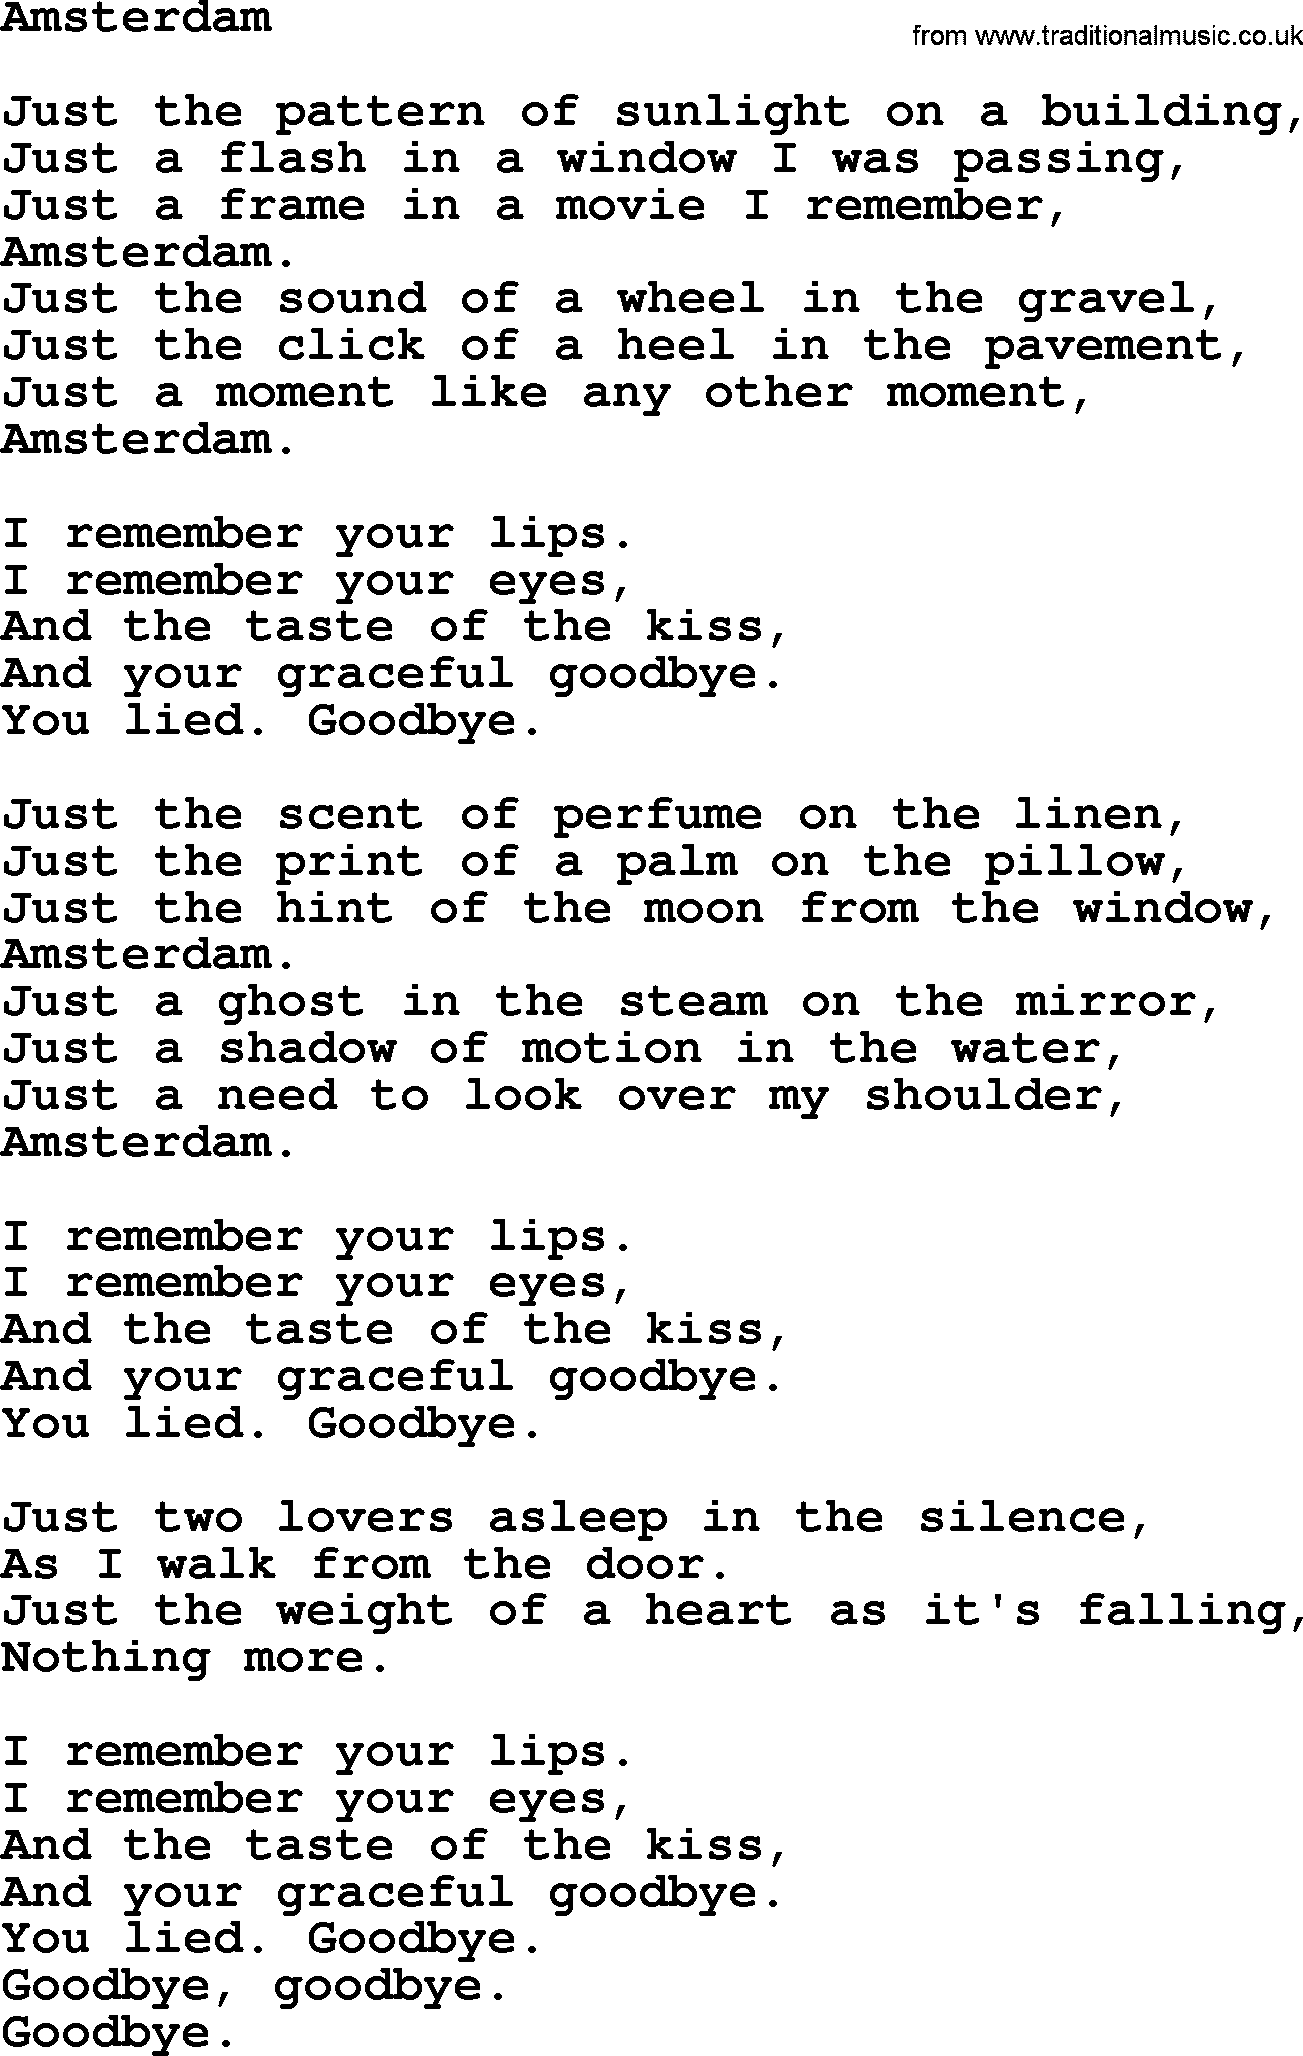 Joan Baez song Amsterdam, lyrics